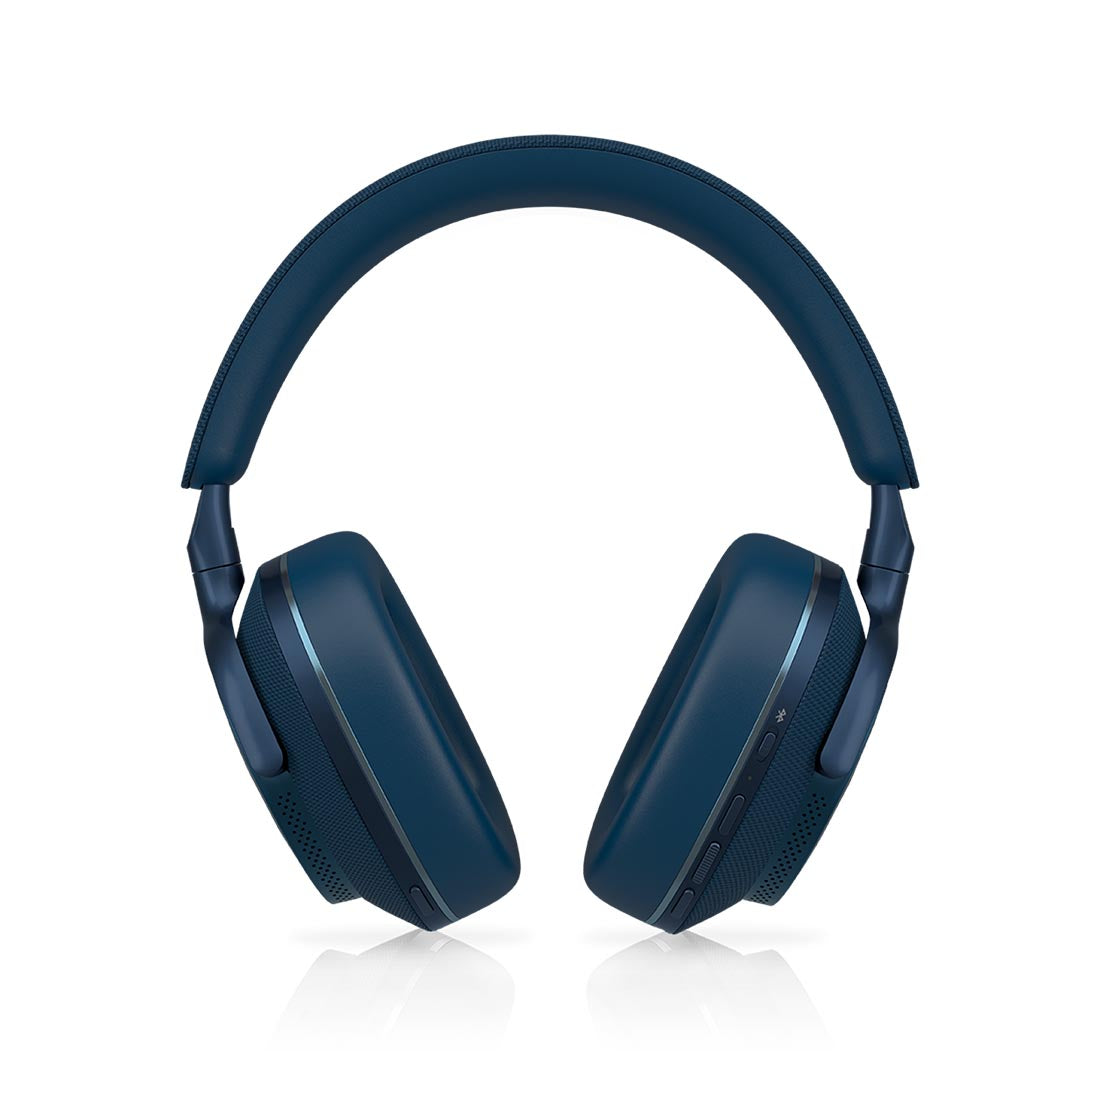 Bowers & Wilkins Px7 S2e headphones